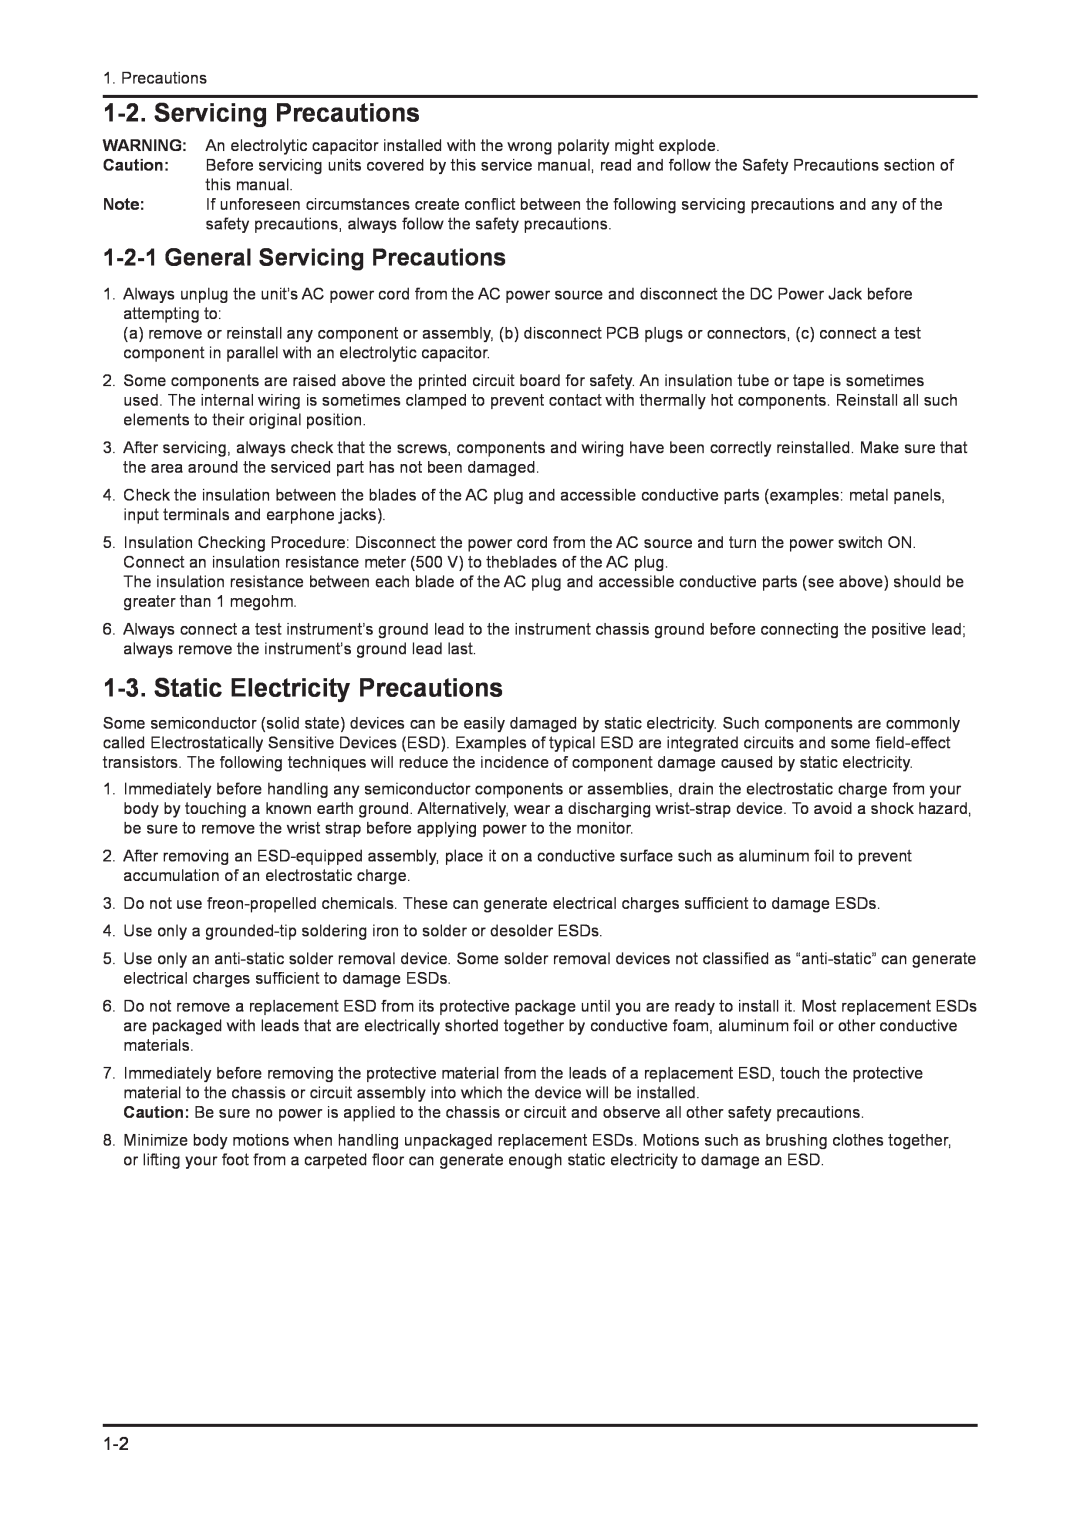 Samsung 943NWX service manual Static Electricity Precautions, General Servicing Precautions 